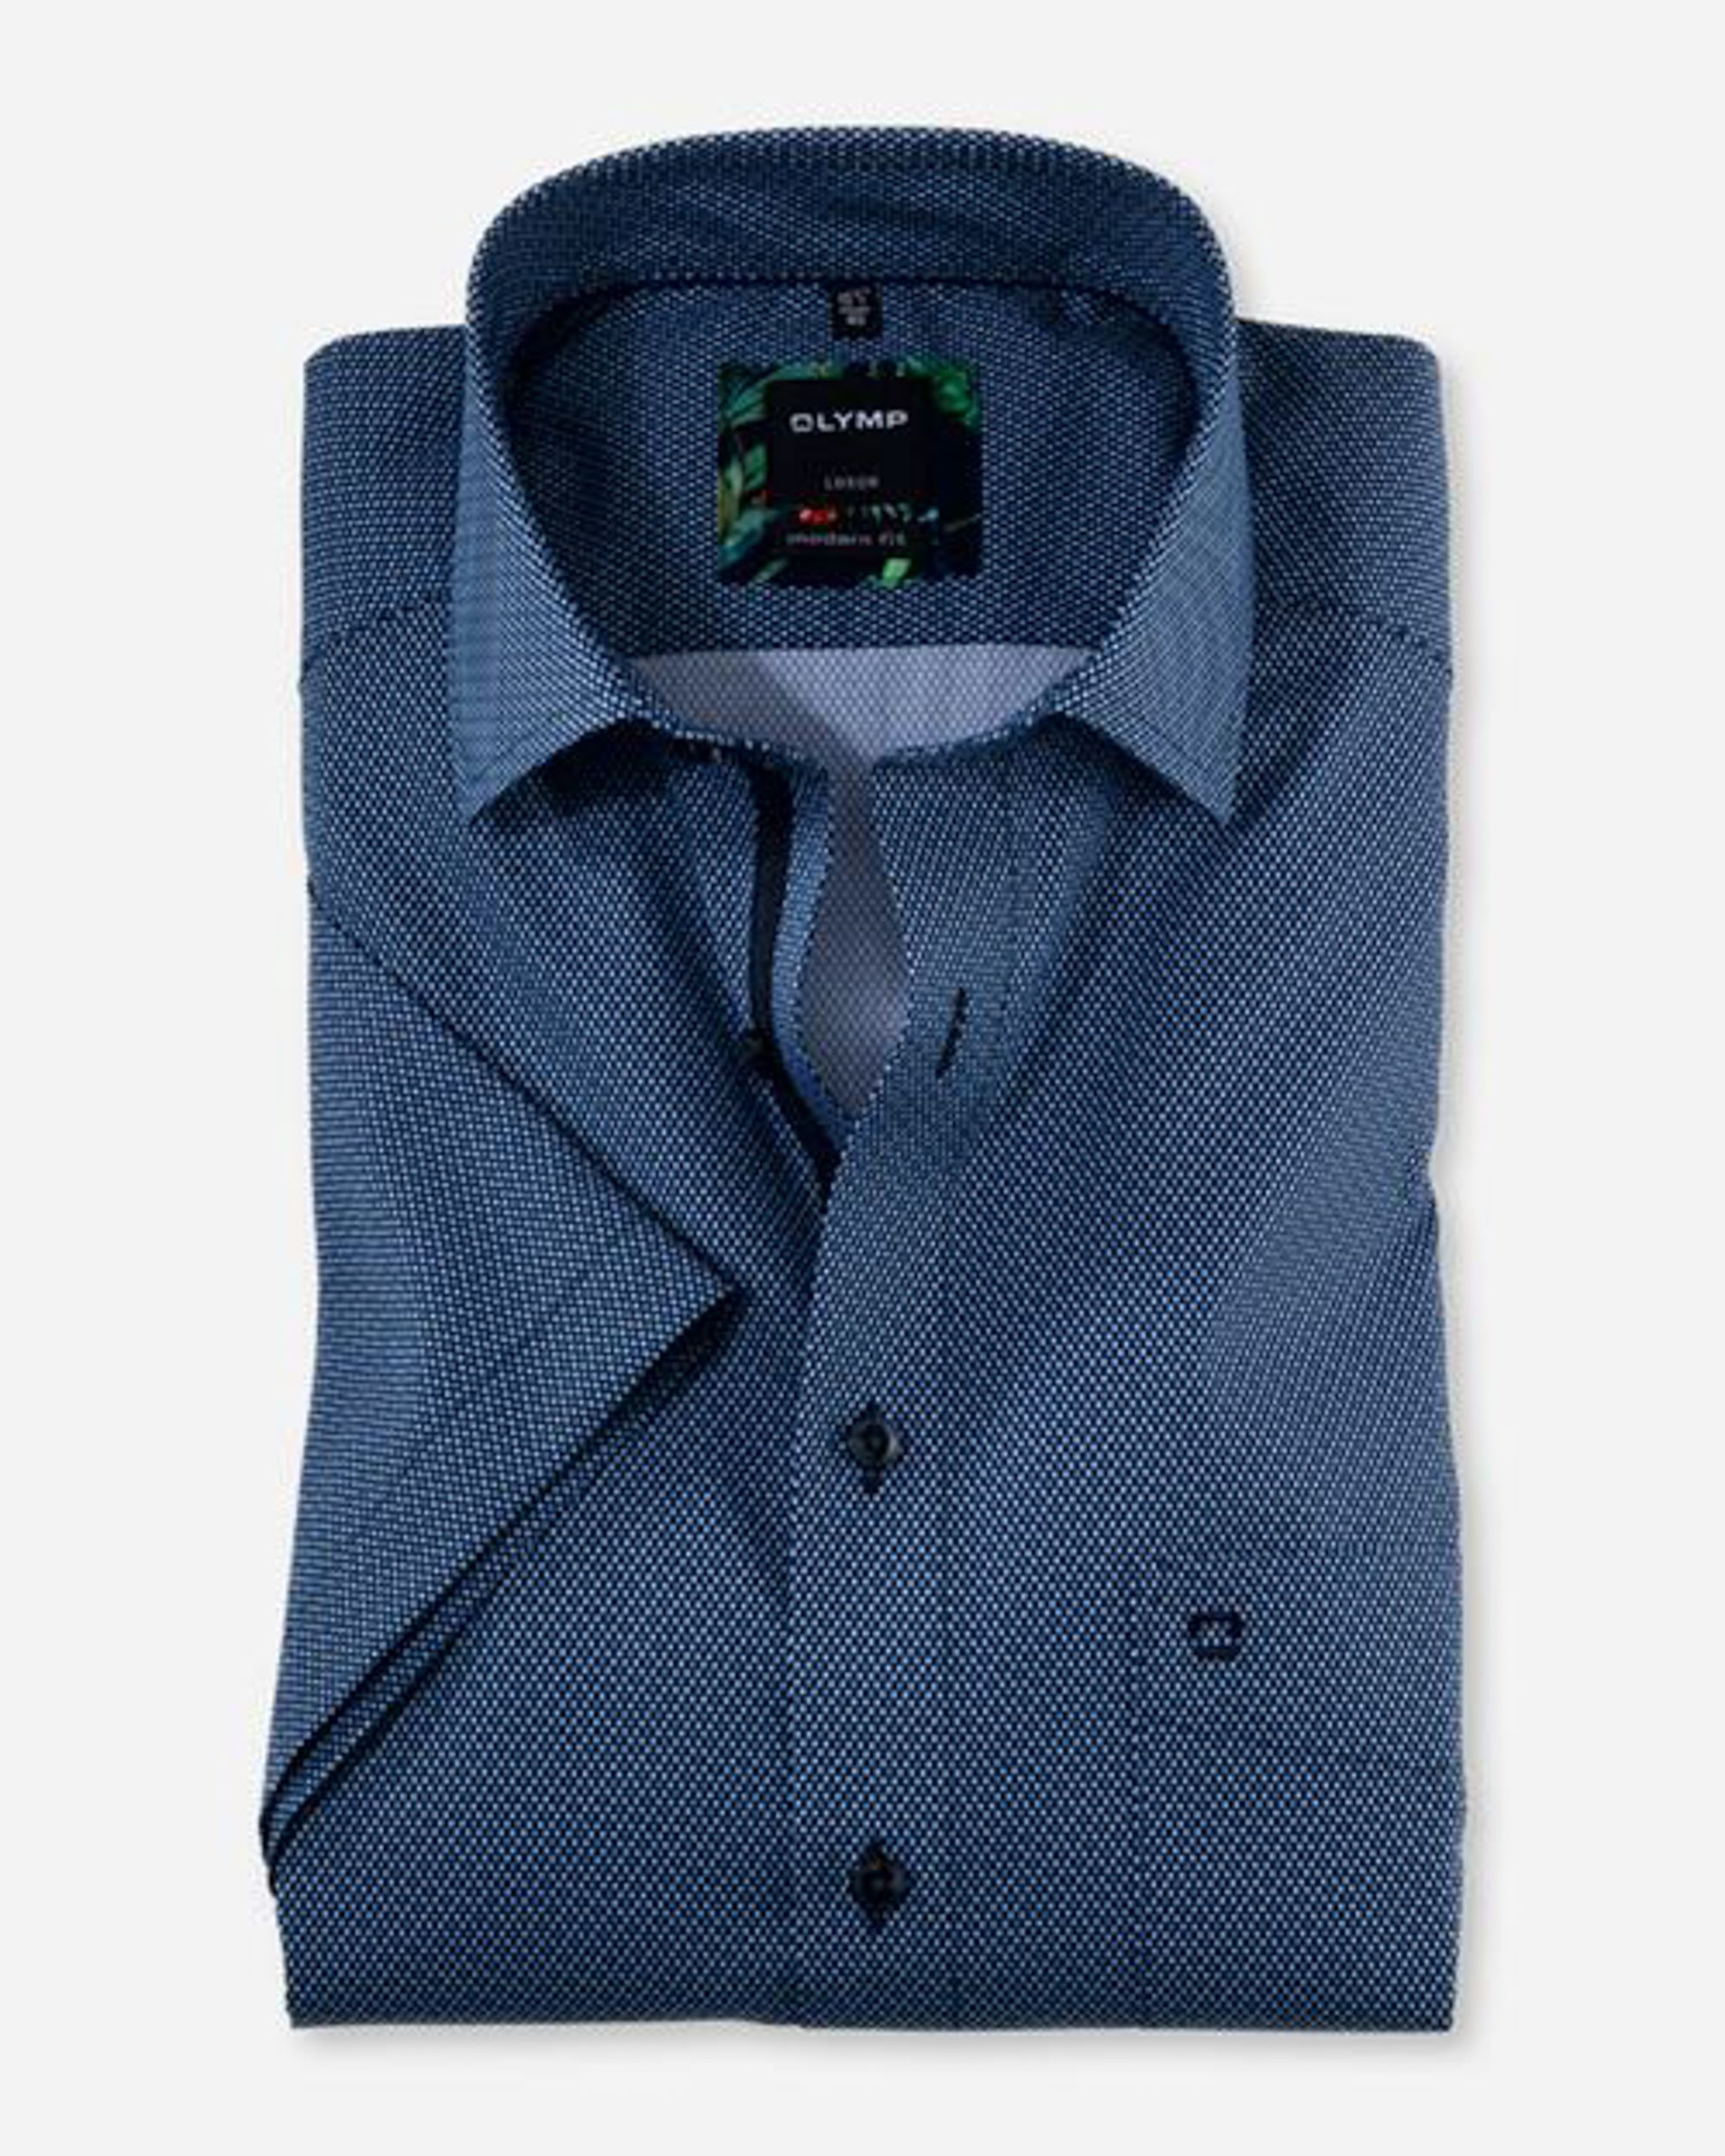 OLYMP Modern Fit Overhemd KM Donker blauw 075695-001-47